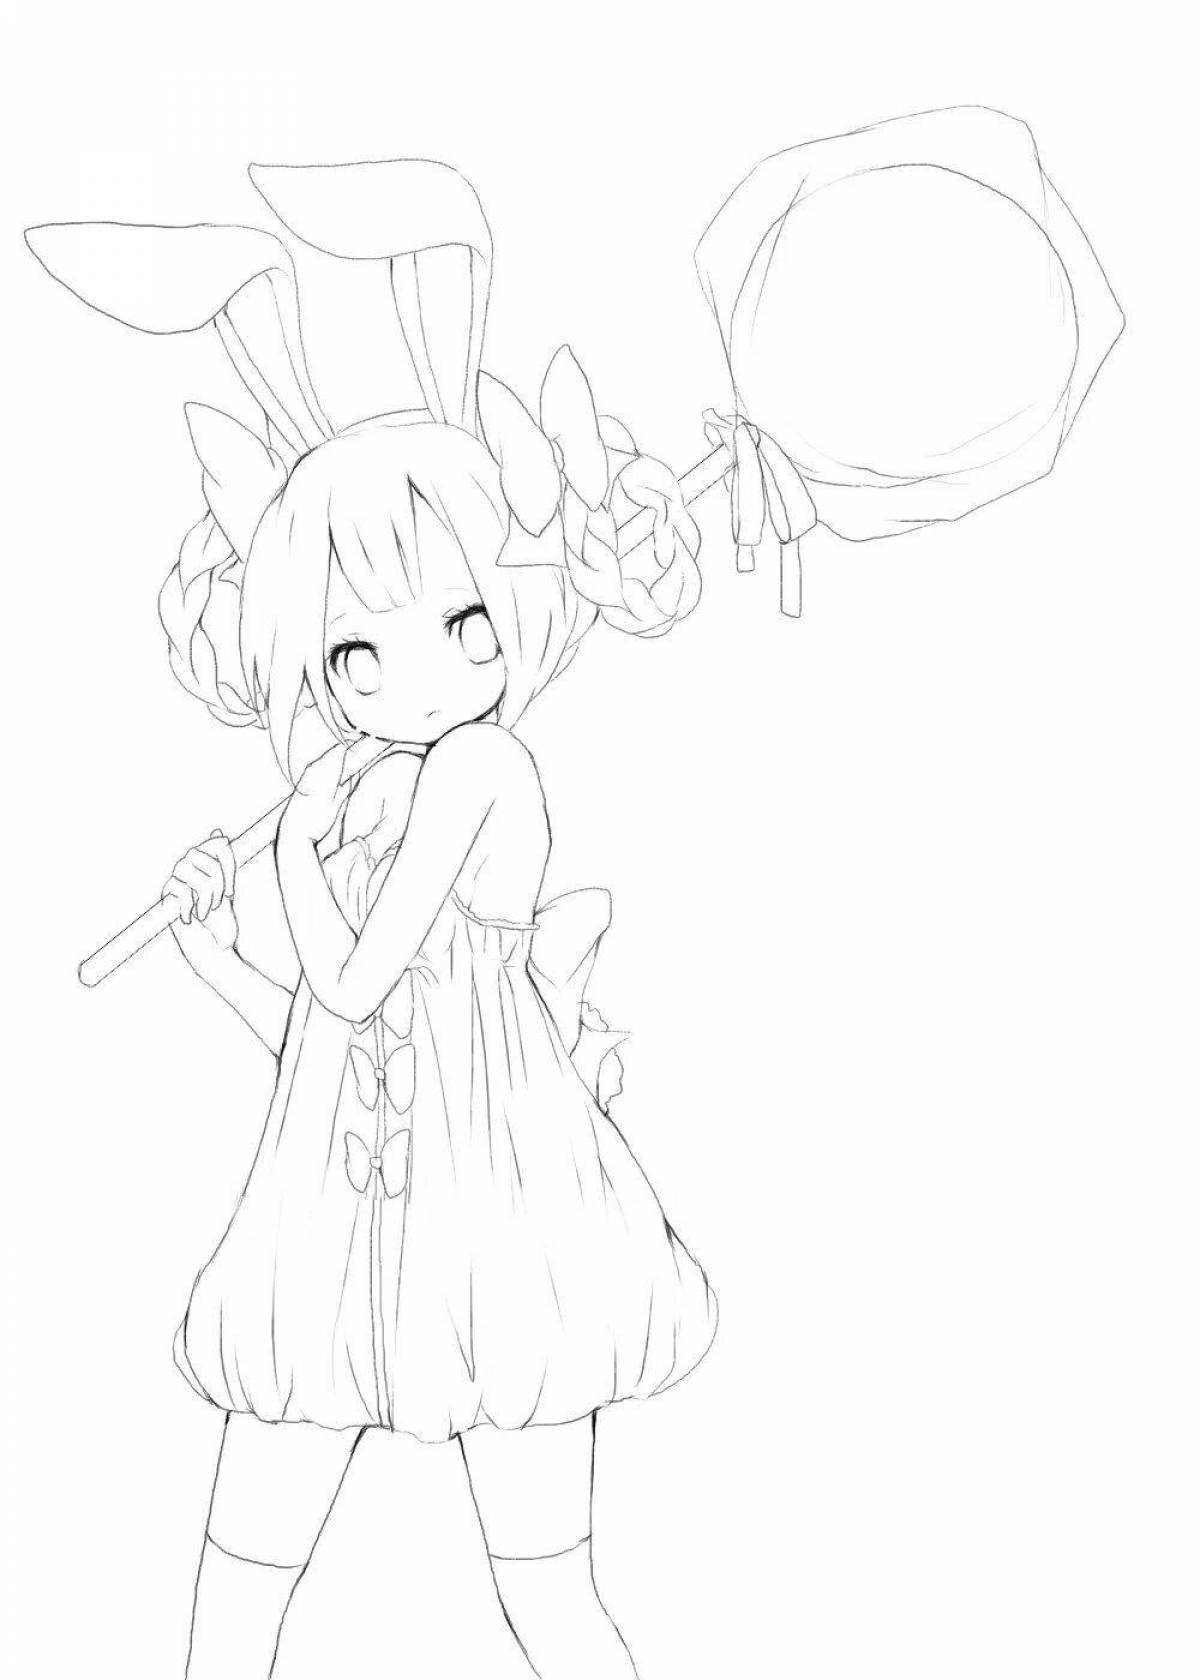 Joyful coloring page rabbit girl